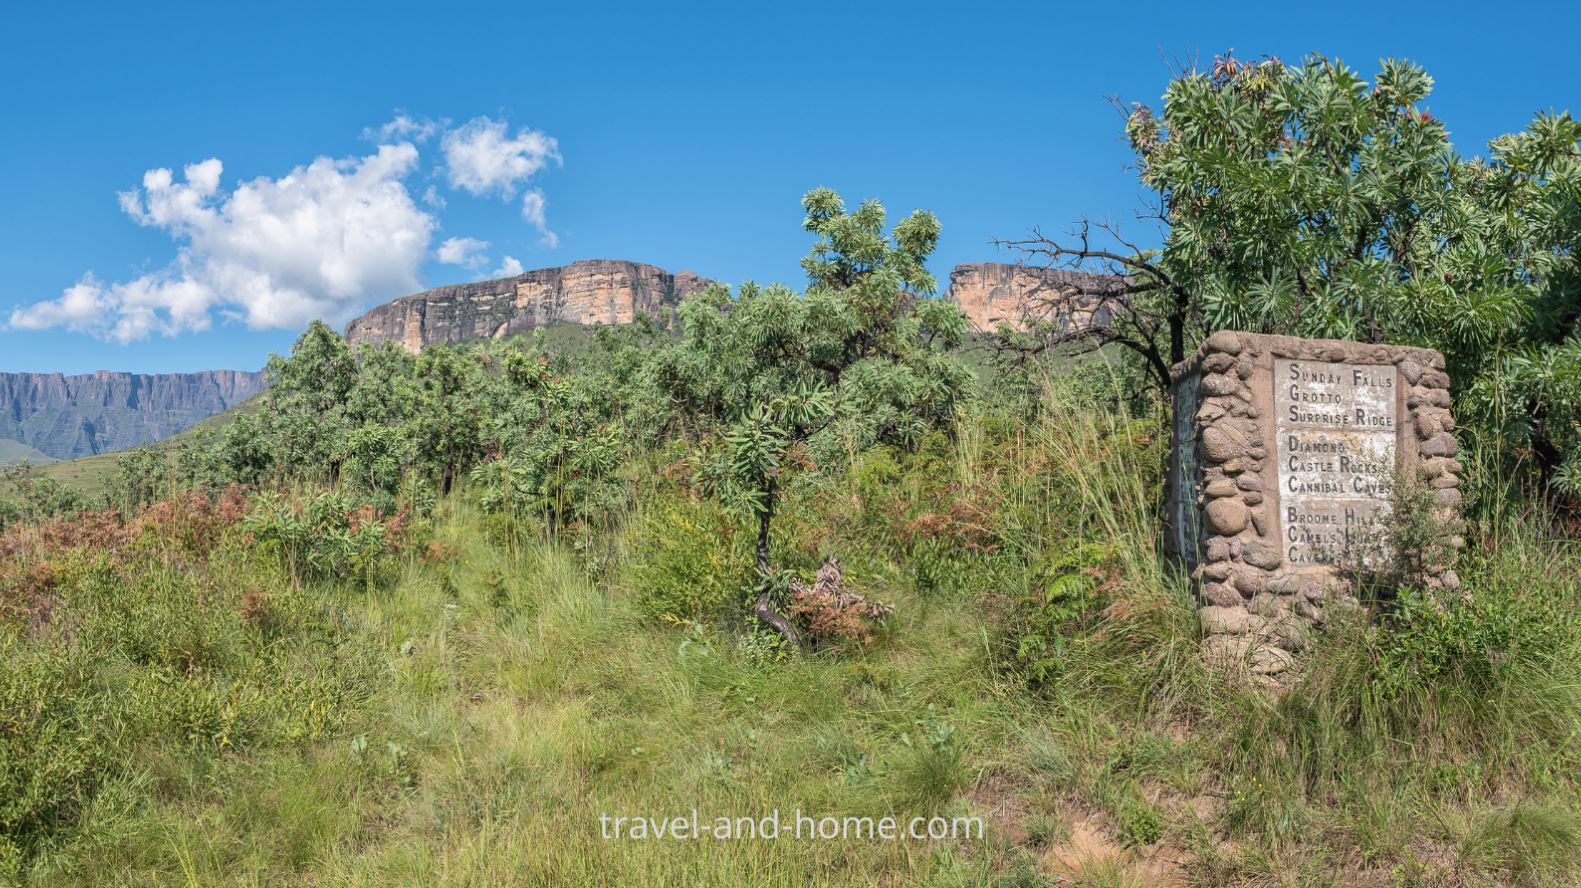 sign hiking trail slopes Ploughmans Kop Dooley Hills Amphitheatre Drakensberg hiking trails South Africa min